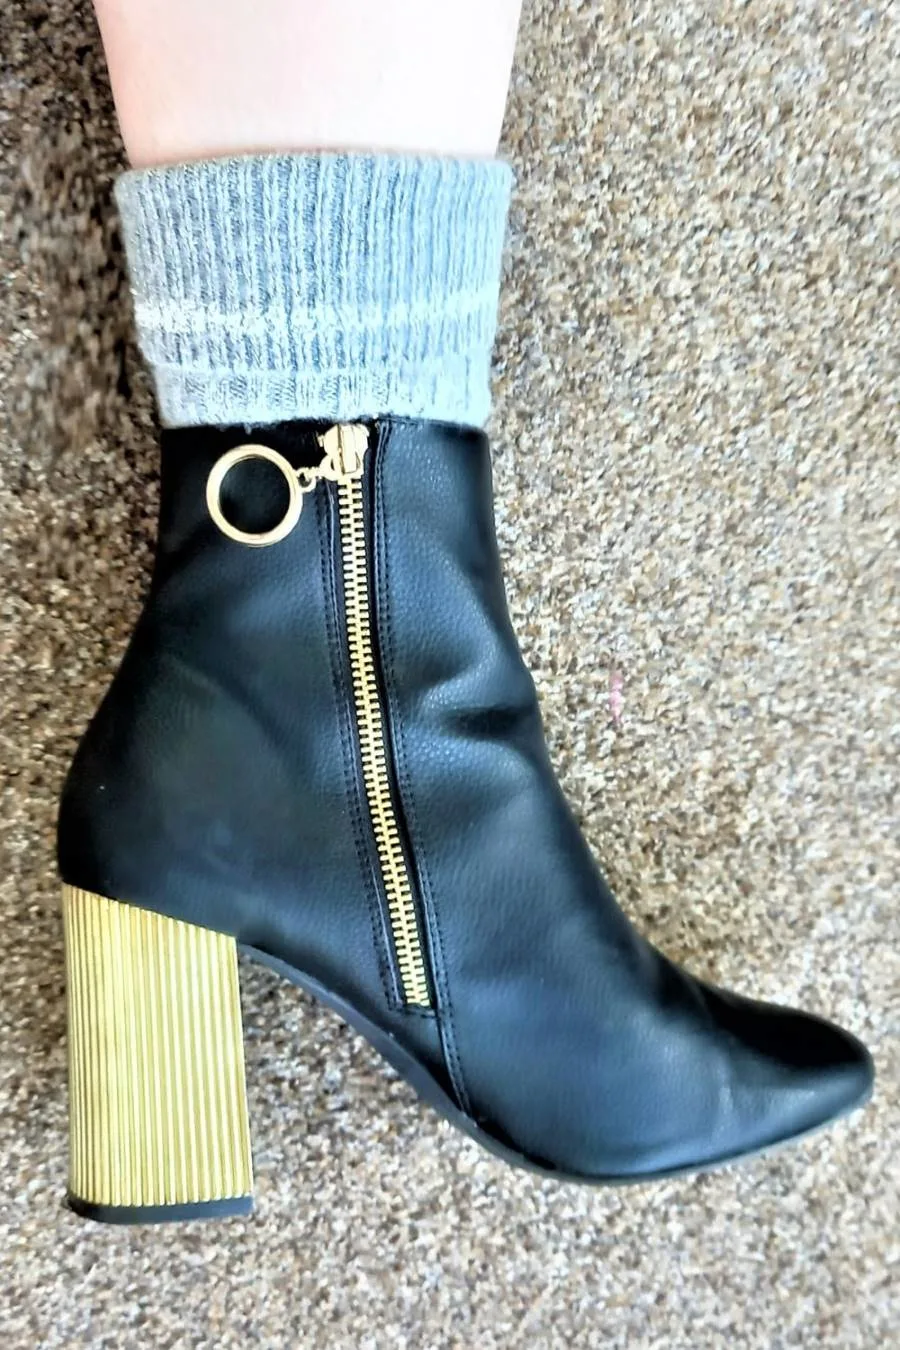 Black boot and grey wool socks